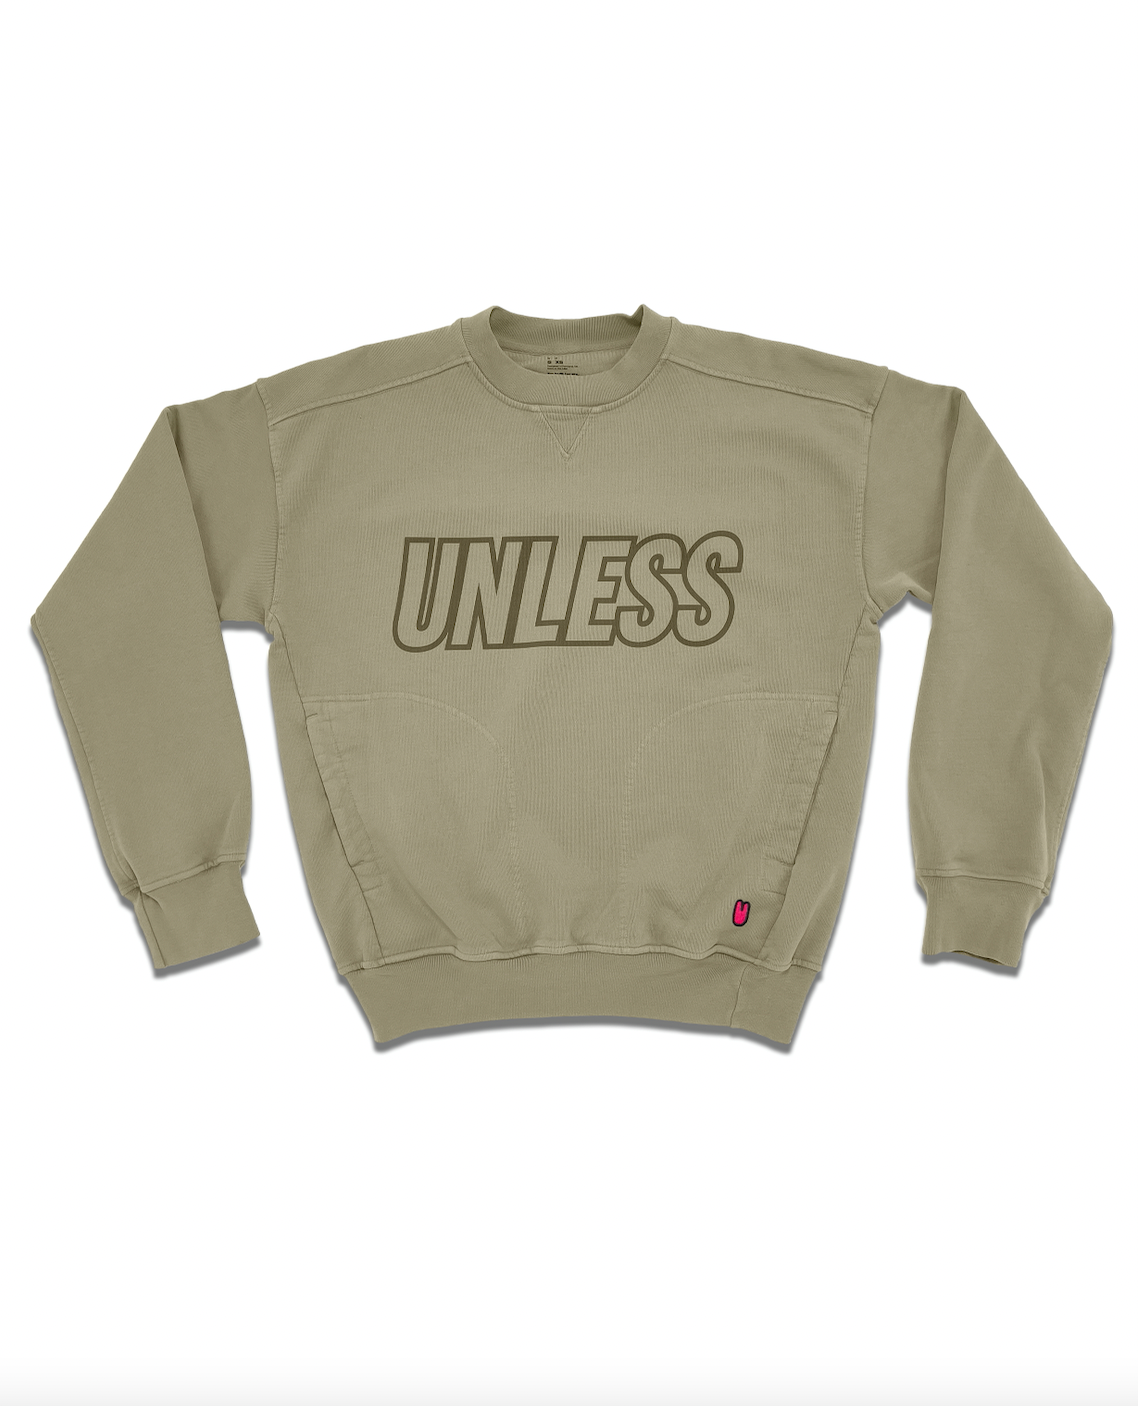 The UNLESS Biodegradable Crew Sweatshirt